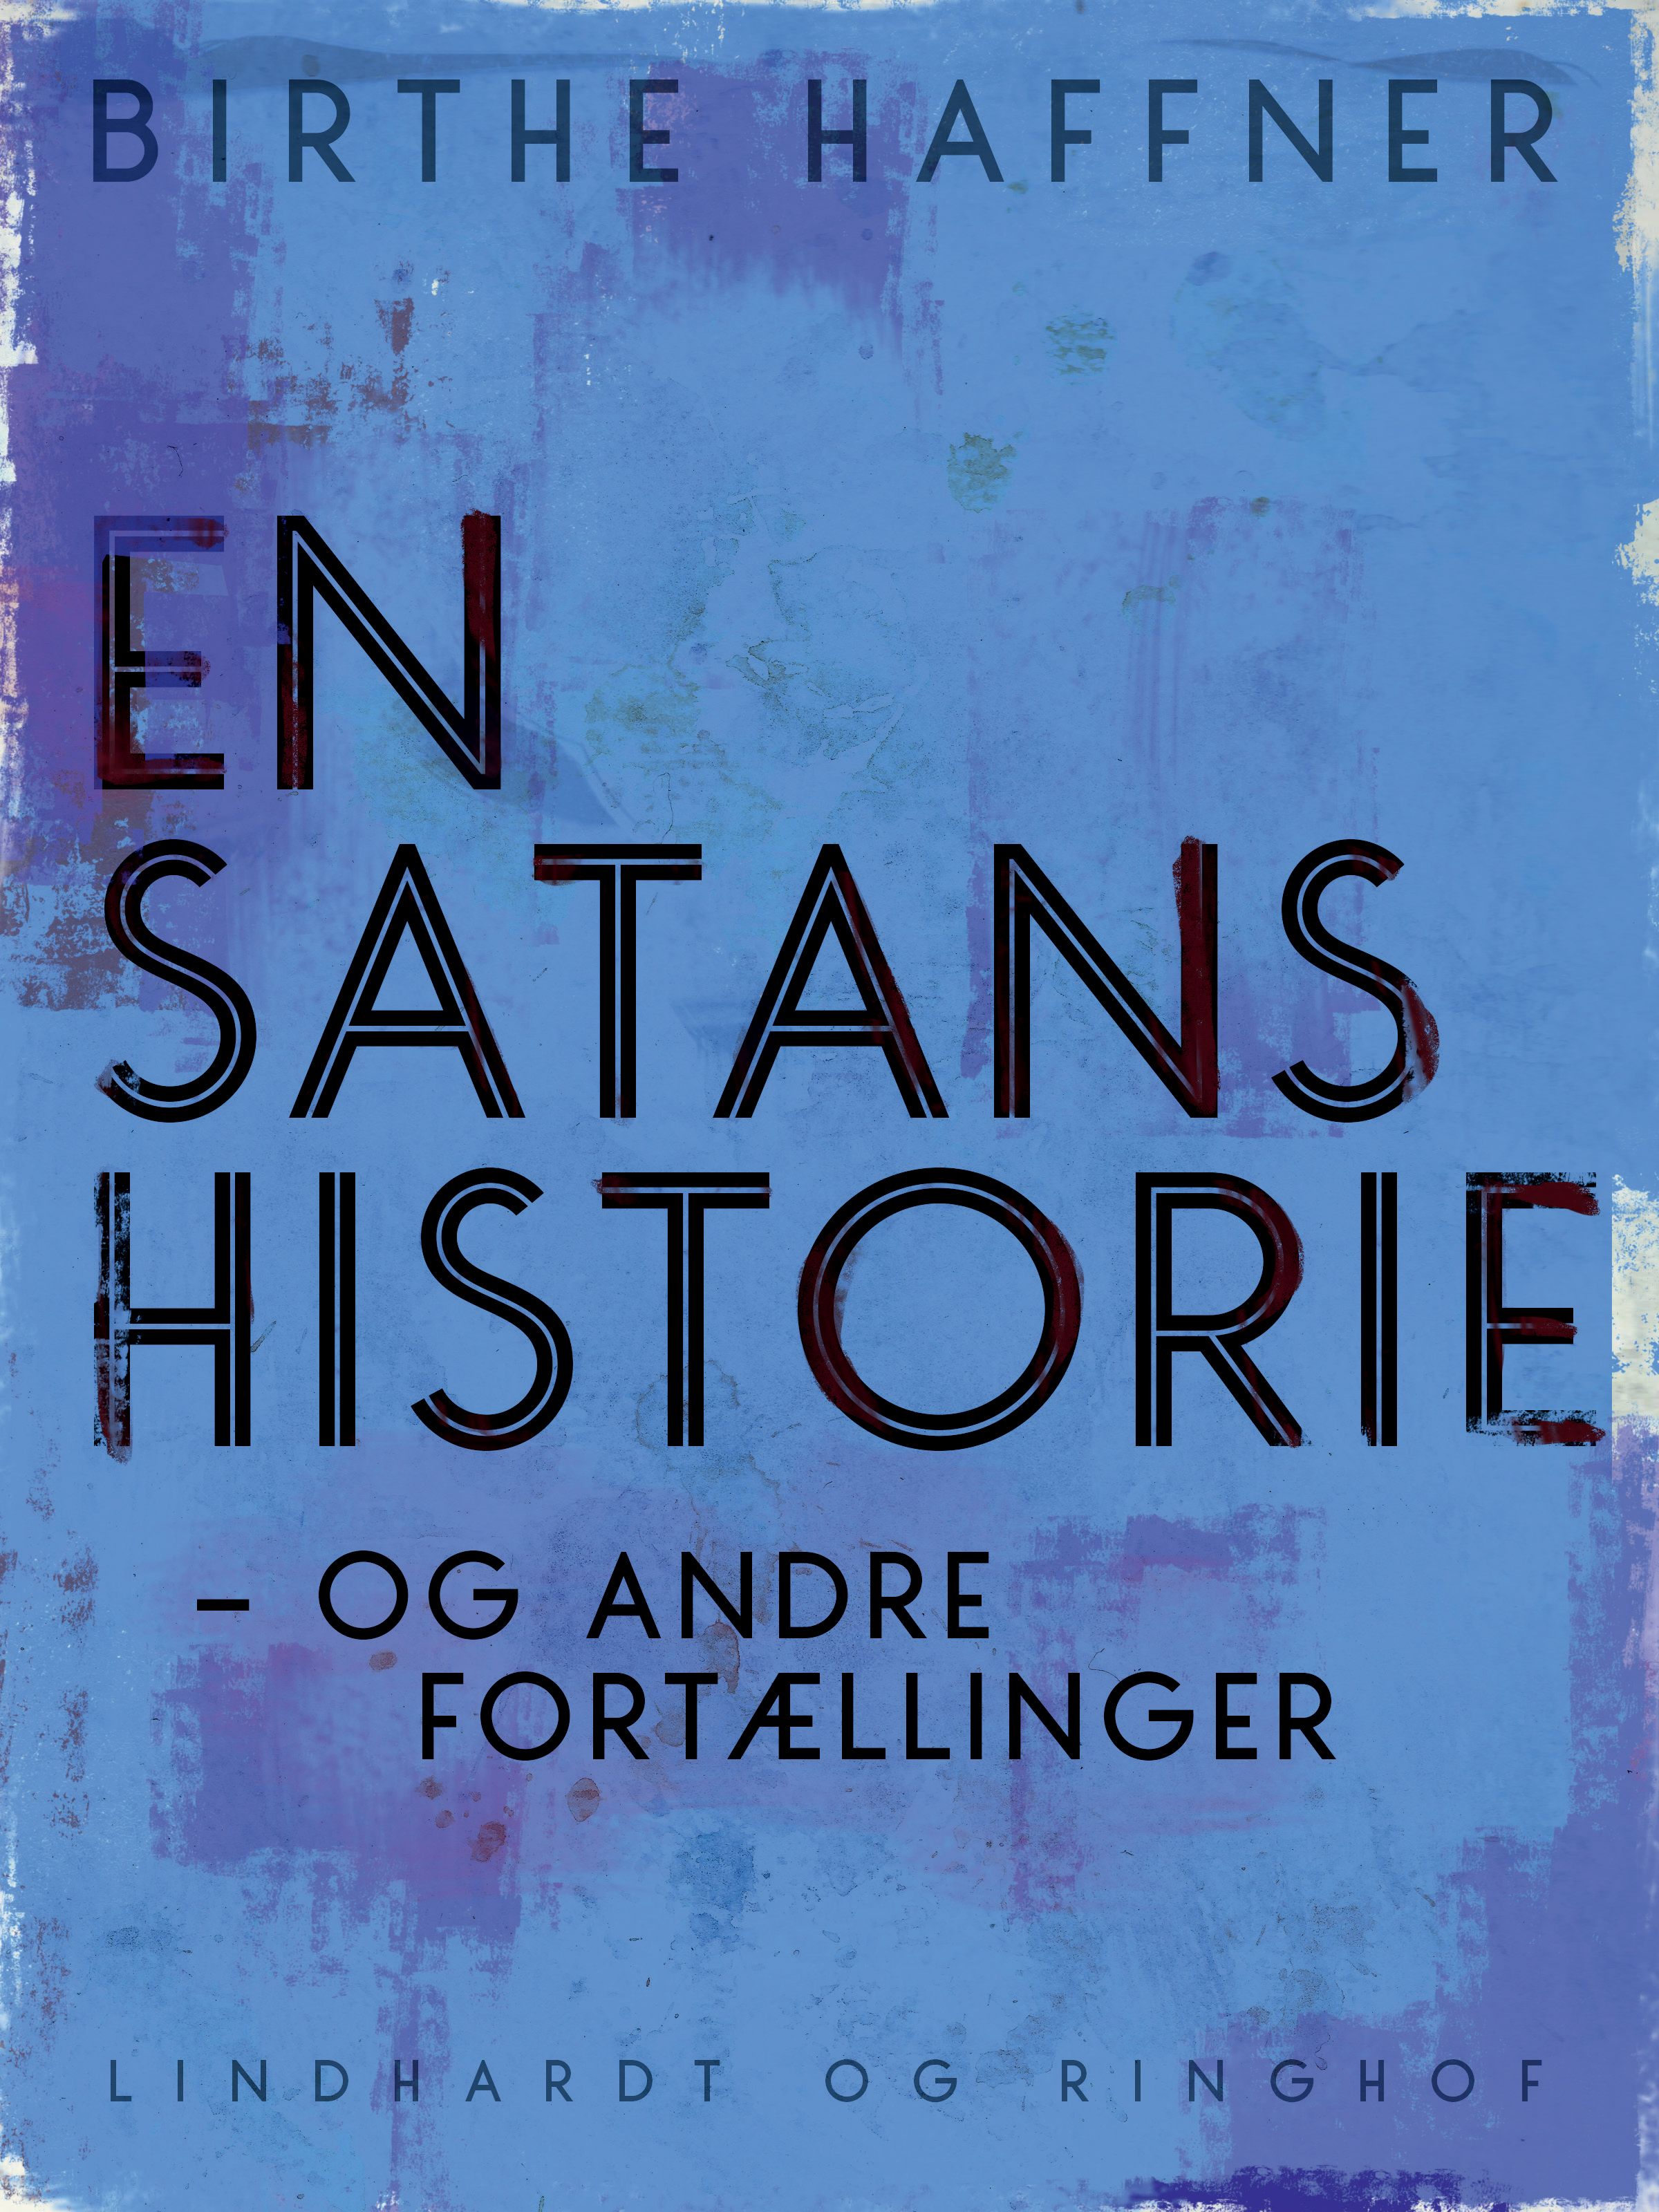 En satans historie - og andre fortællinger, ljudbok av Birthe Haffner